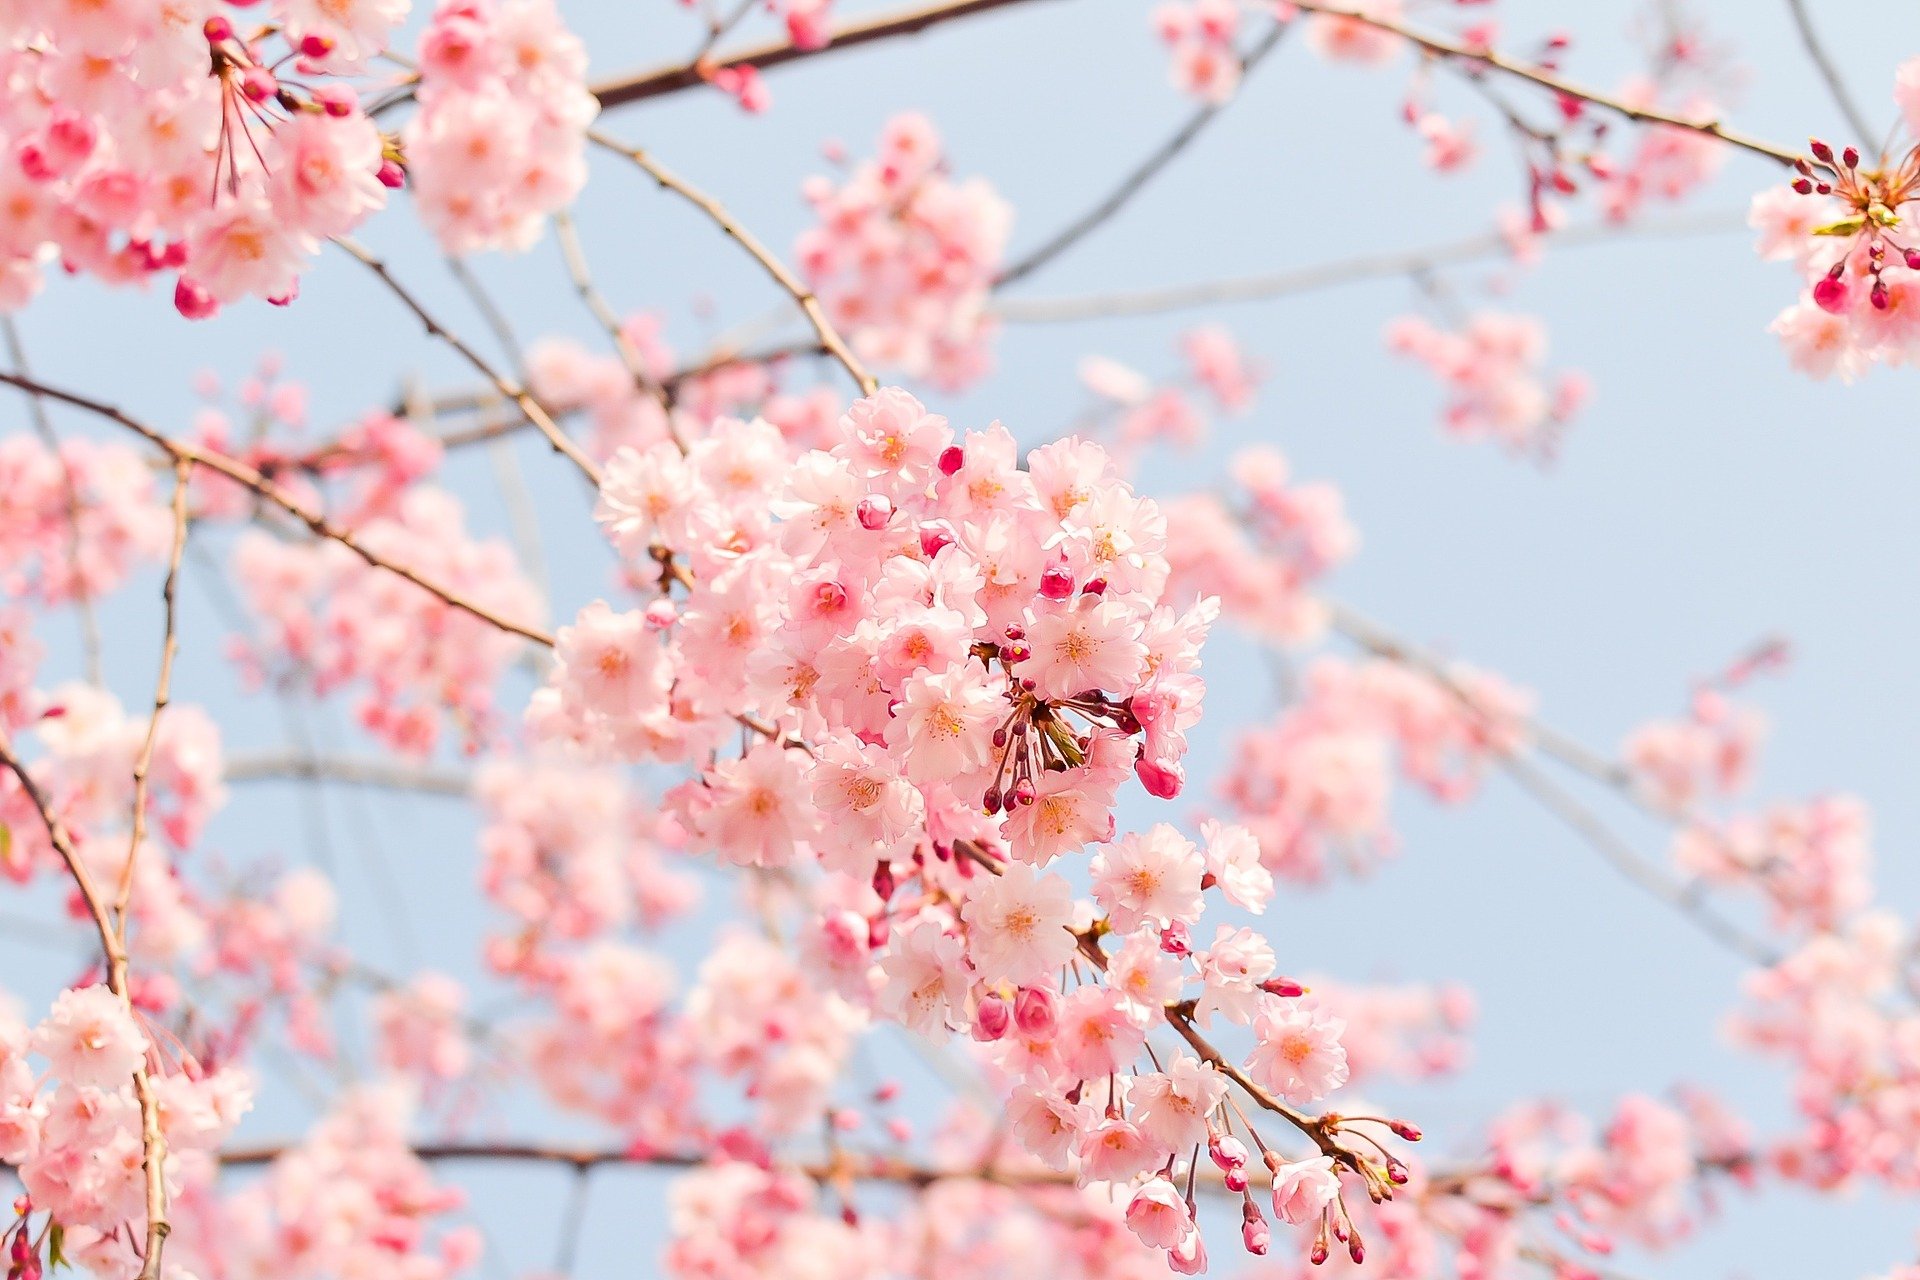 Pink cherry blossom buds and a blue sky